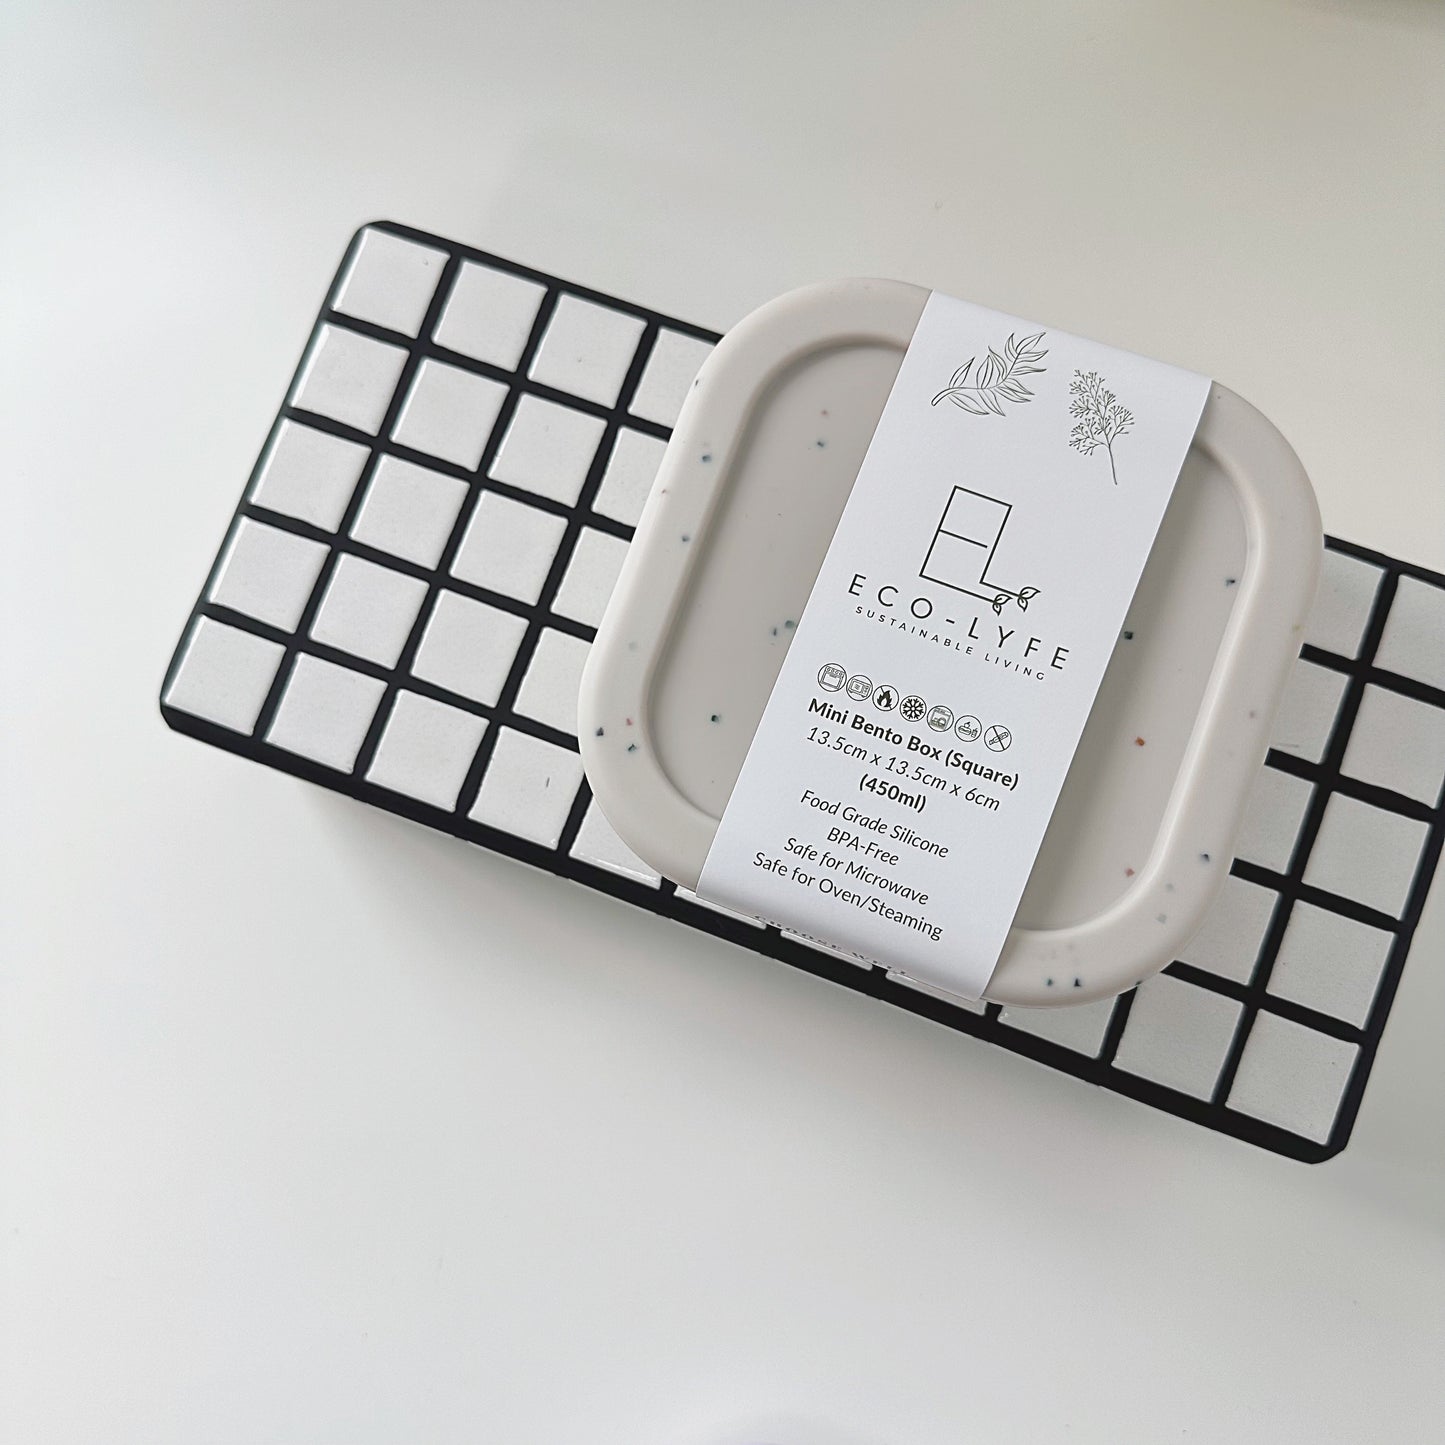 [Eco-Lyfe] Mini Bento Box (Square)